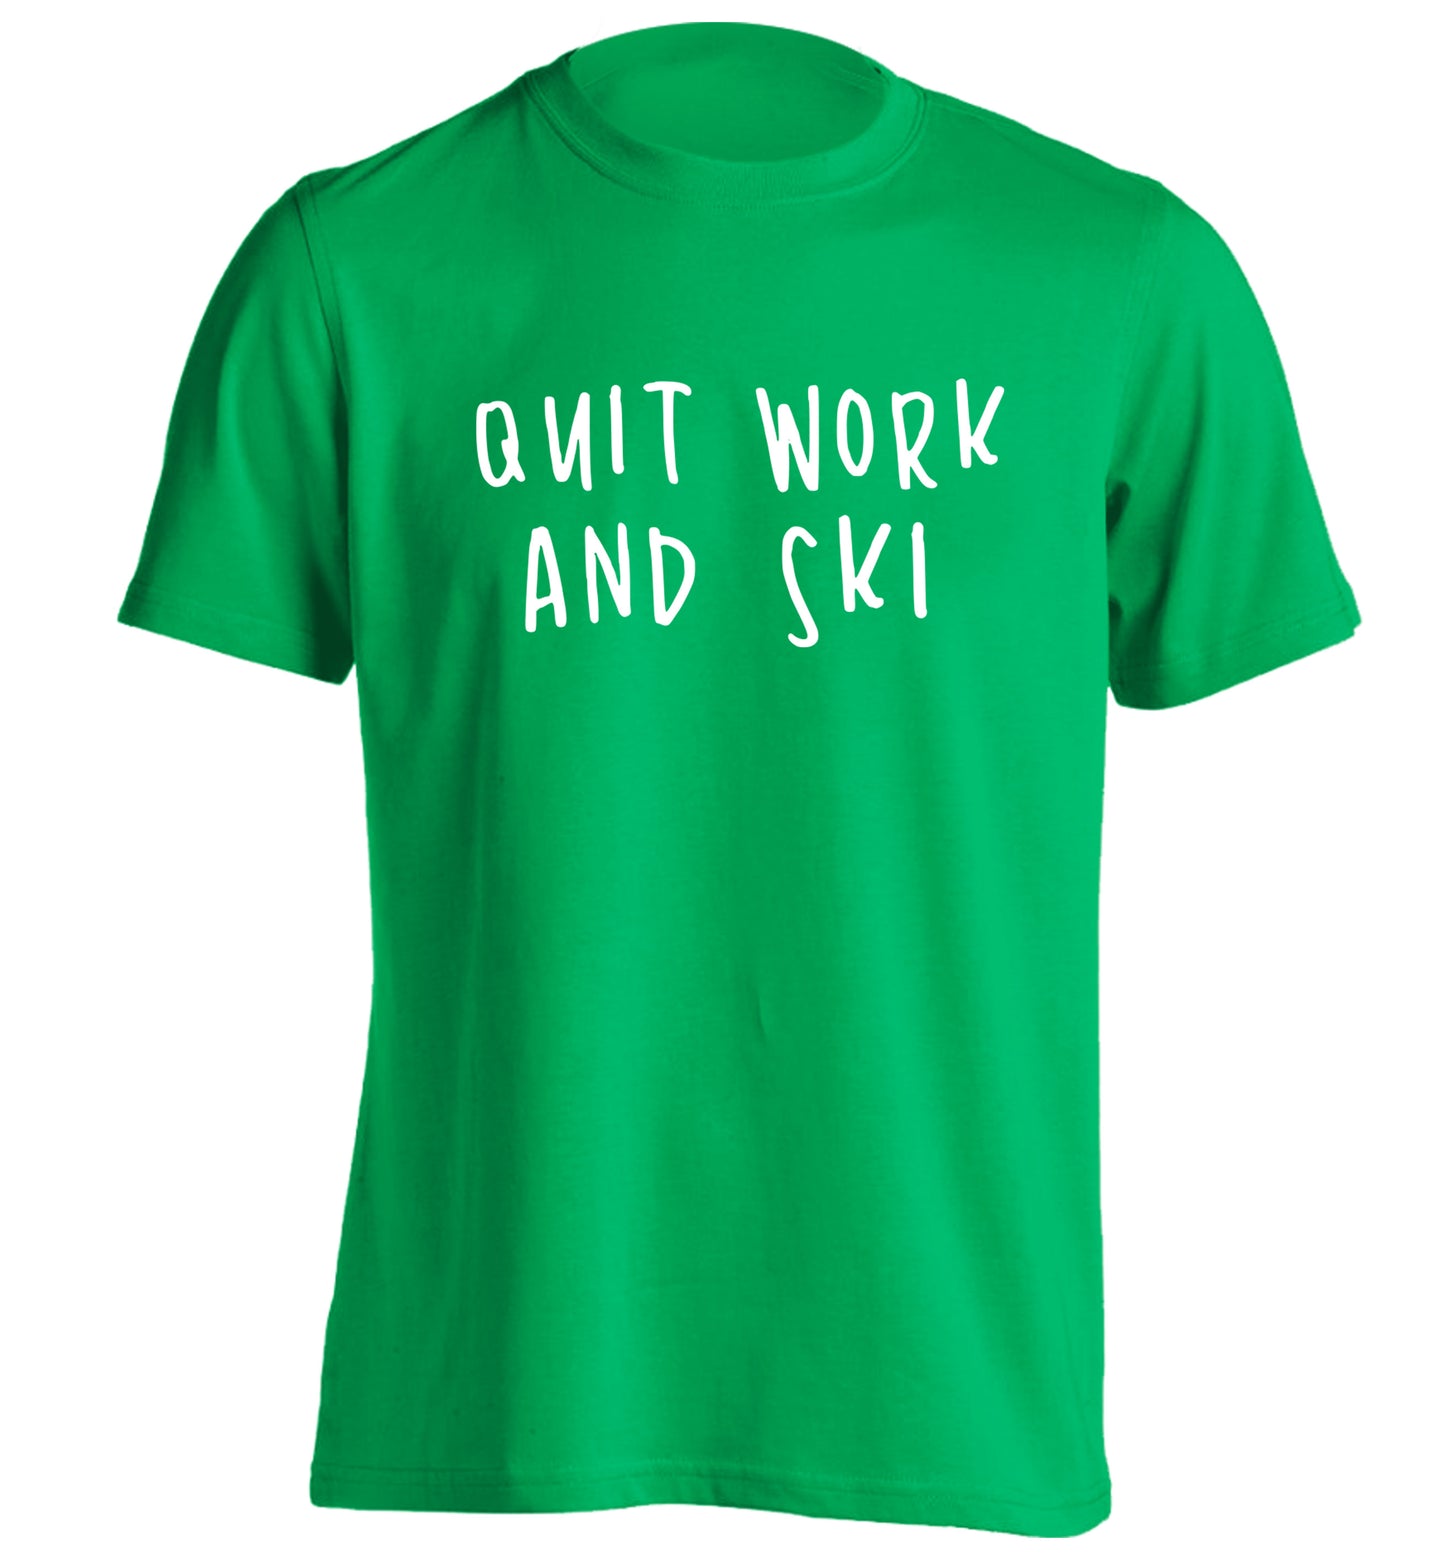 Quit work and ski adults unisexgreen Tshirt 2XL